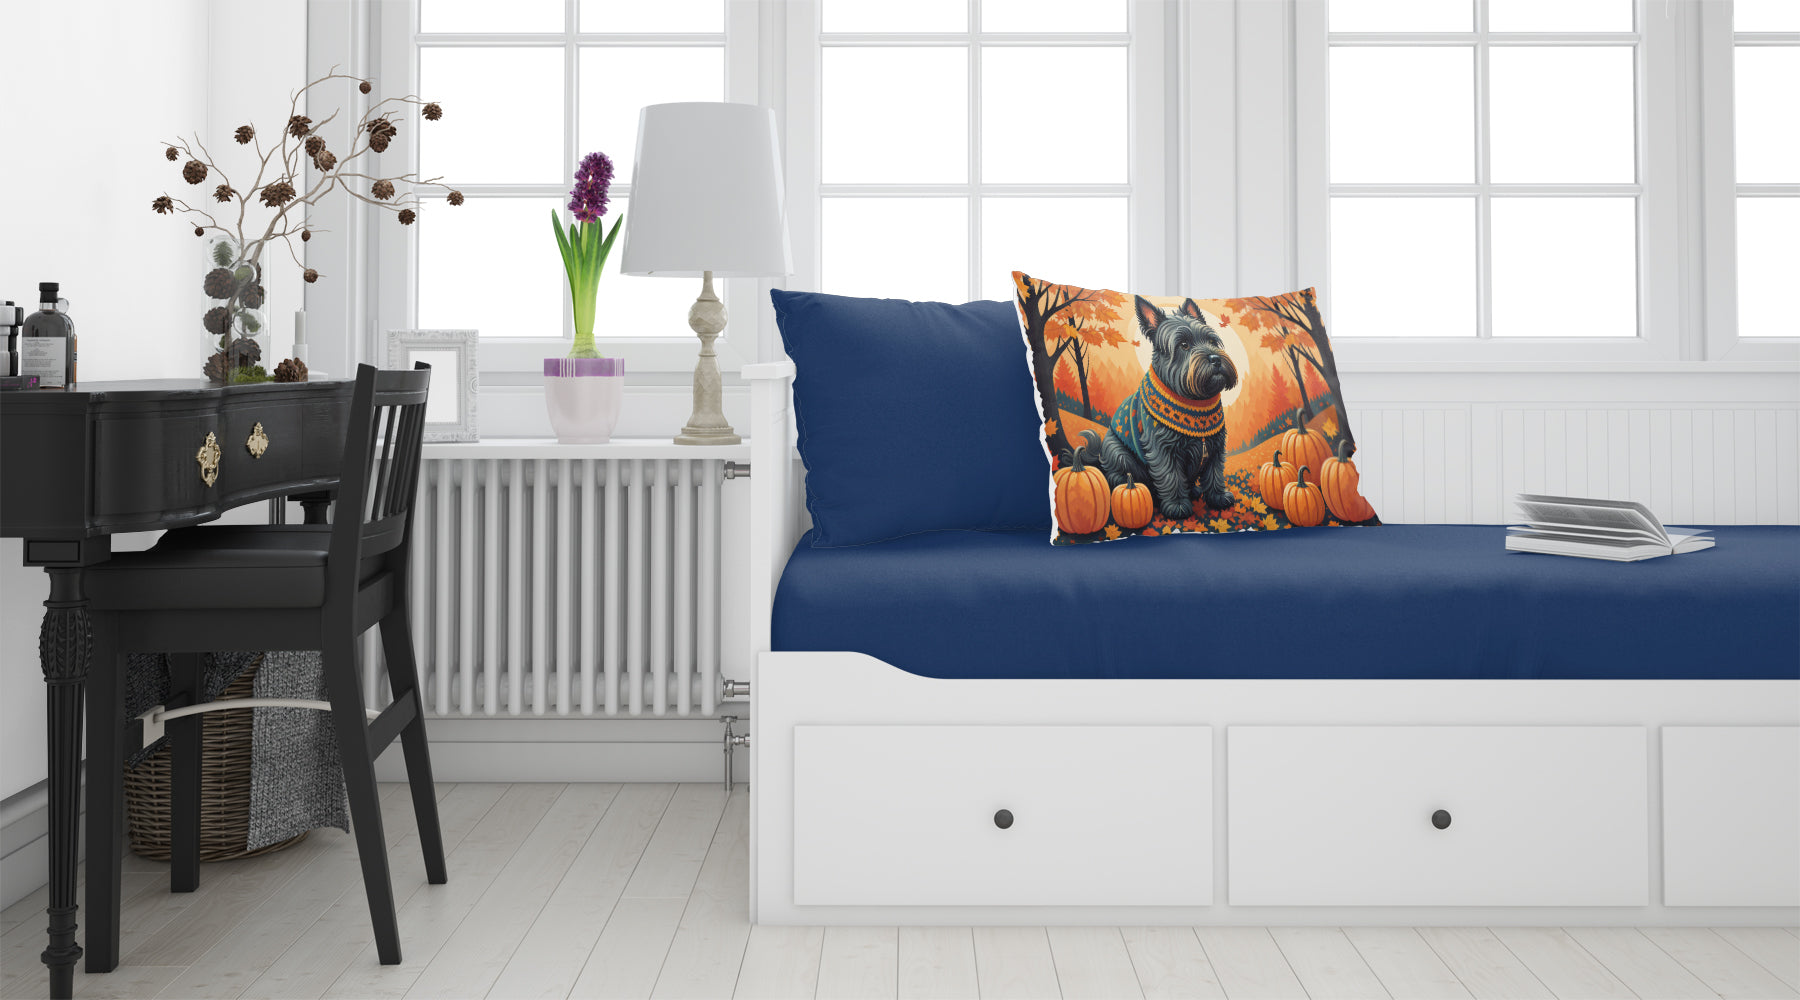 Buy this Scottish Terrier Fall Fabric Standard Pillowcase